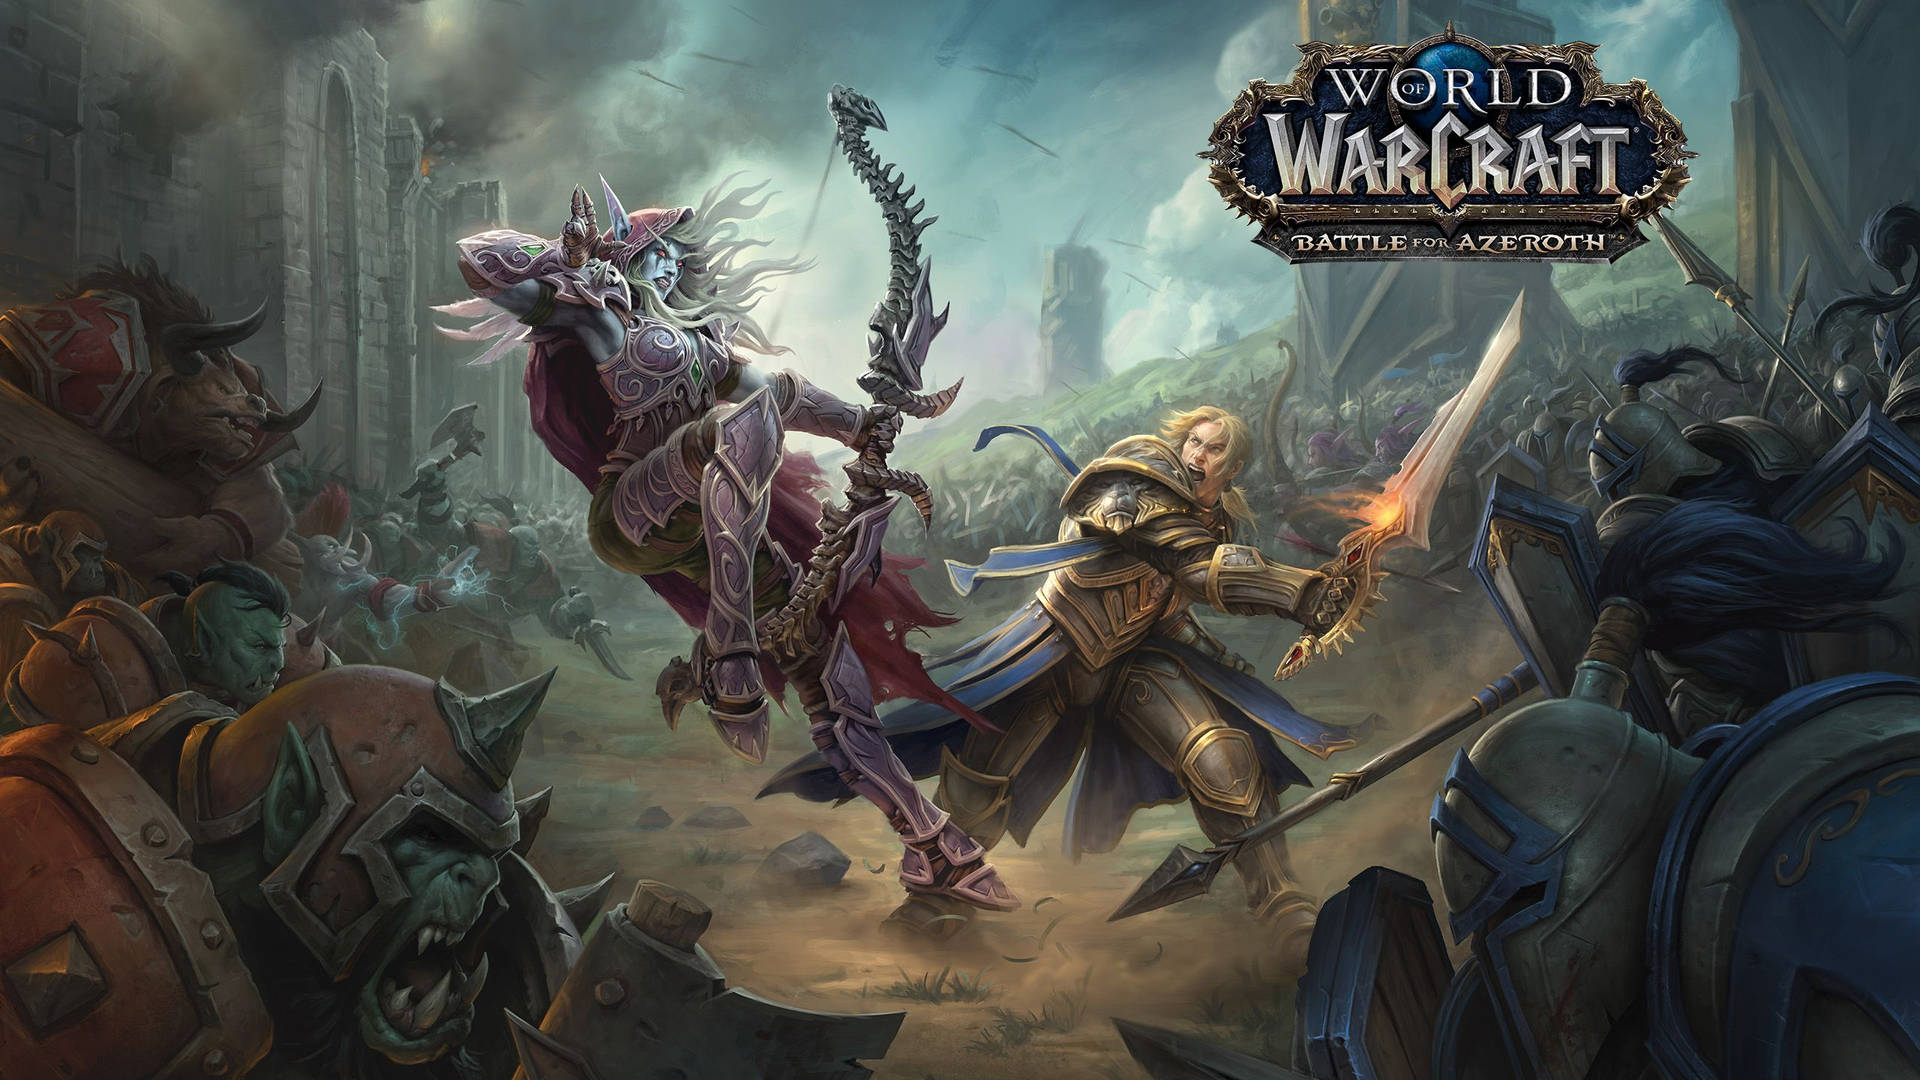 Free World Of Warcraft Wallpaper Downloads, [100+] World Of Warcraft  Wallpapers for FREE 